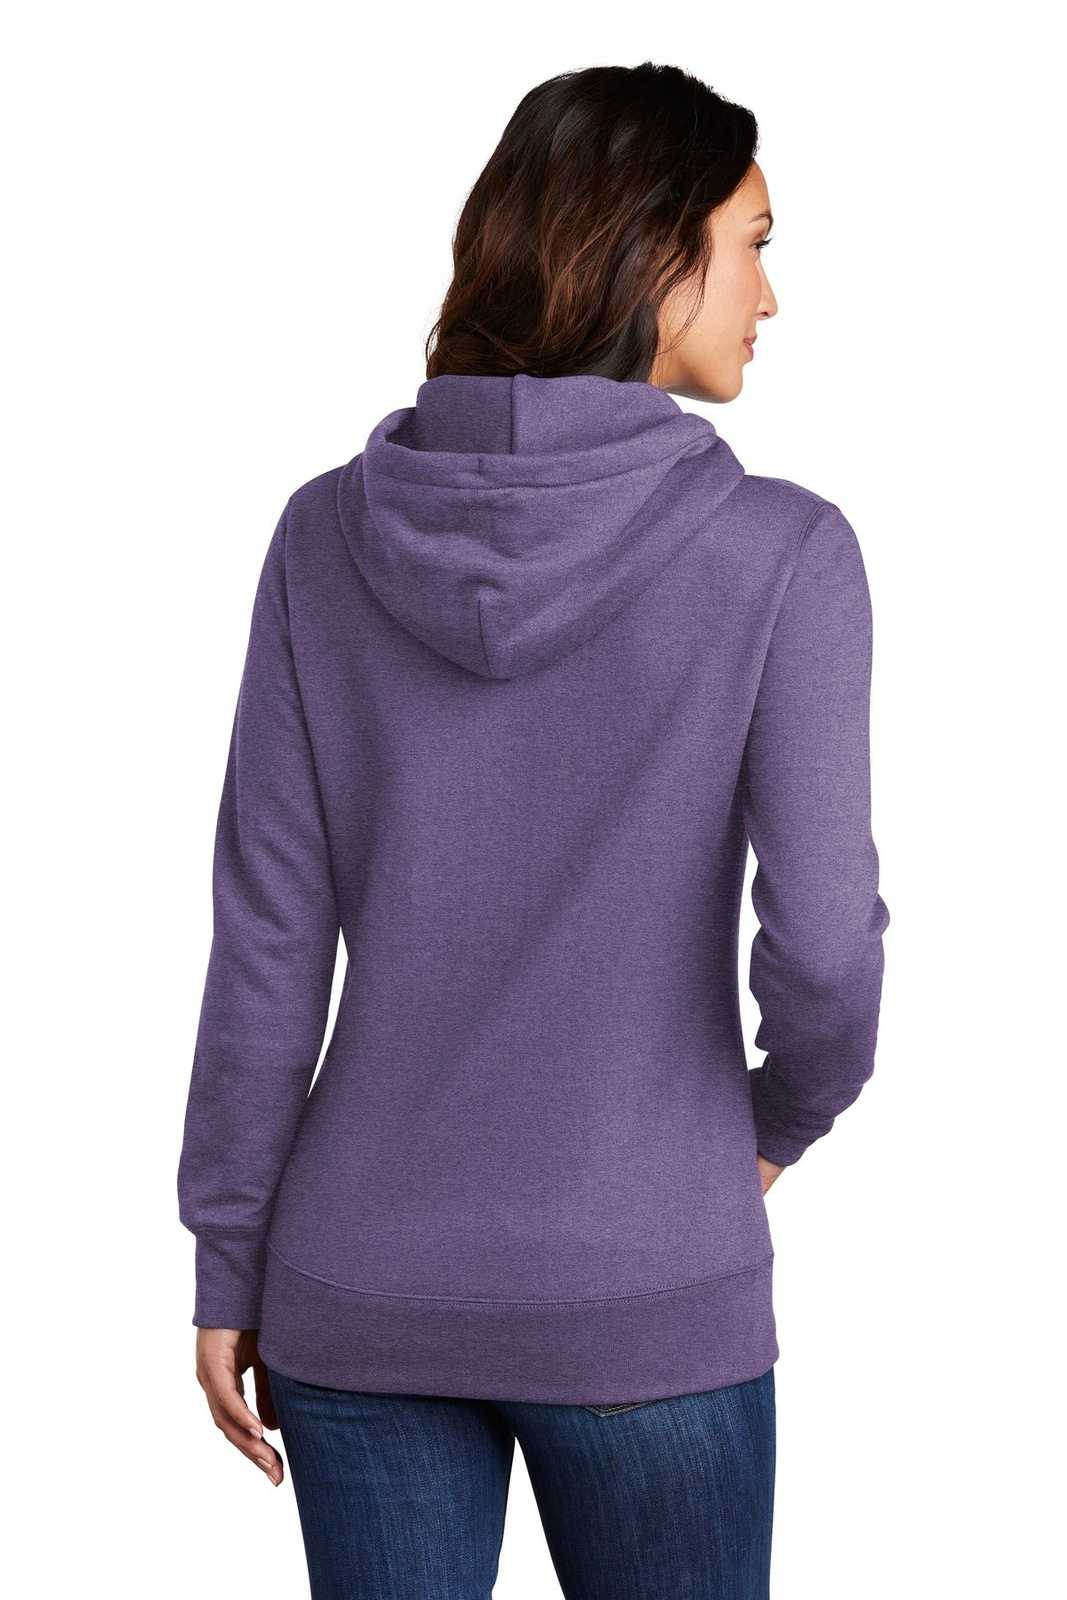 Port & Company LPC78H Ladies Core Fleece Pullover Hooded Sweatshirt - Heather Purple - HIT a Double - 1